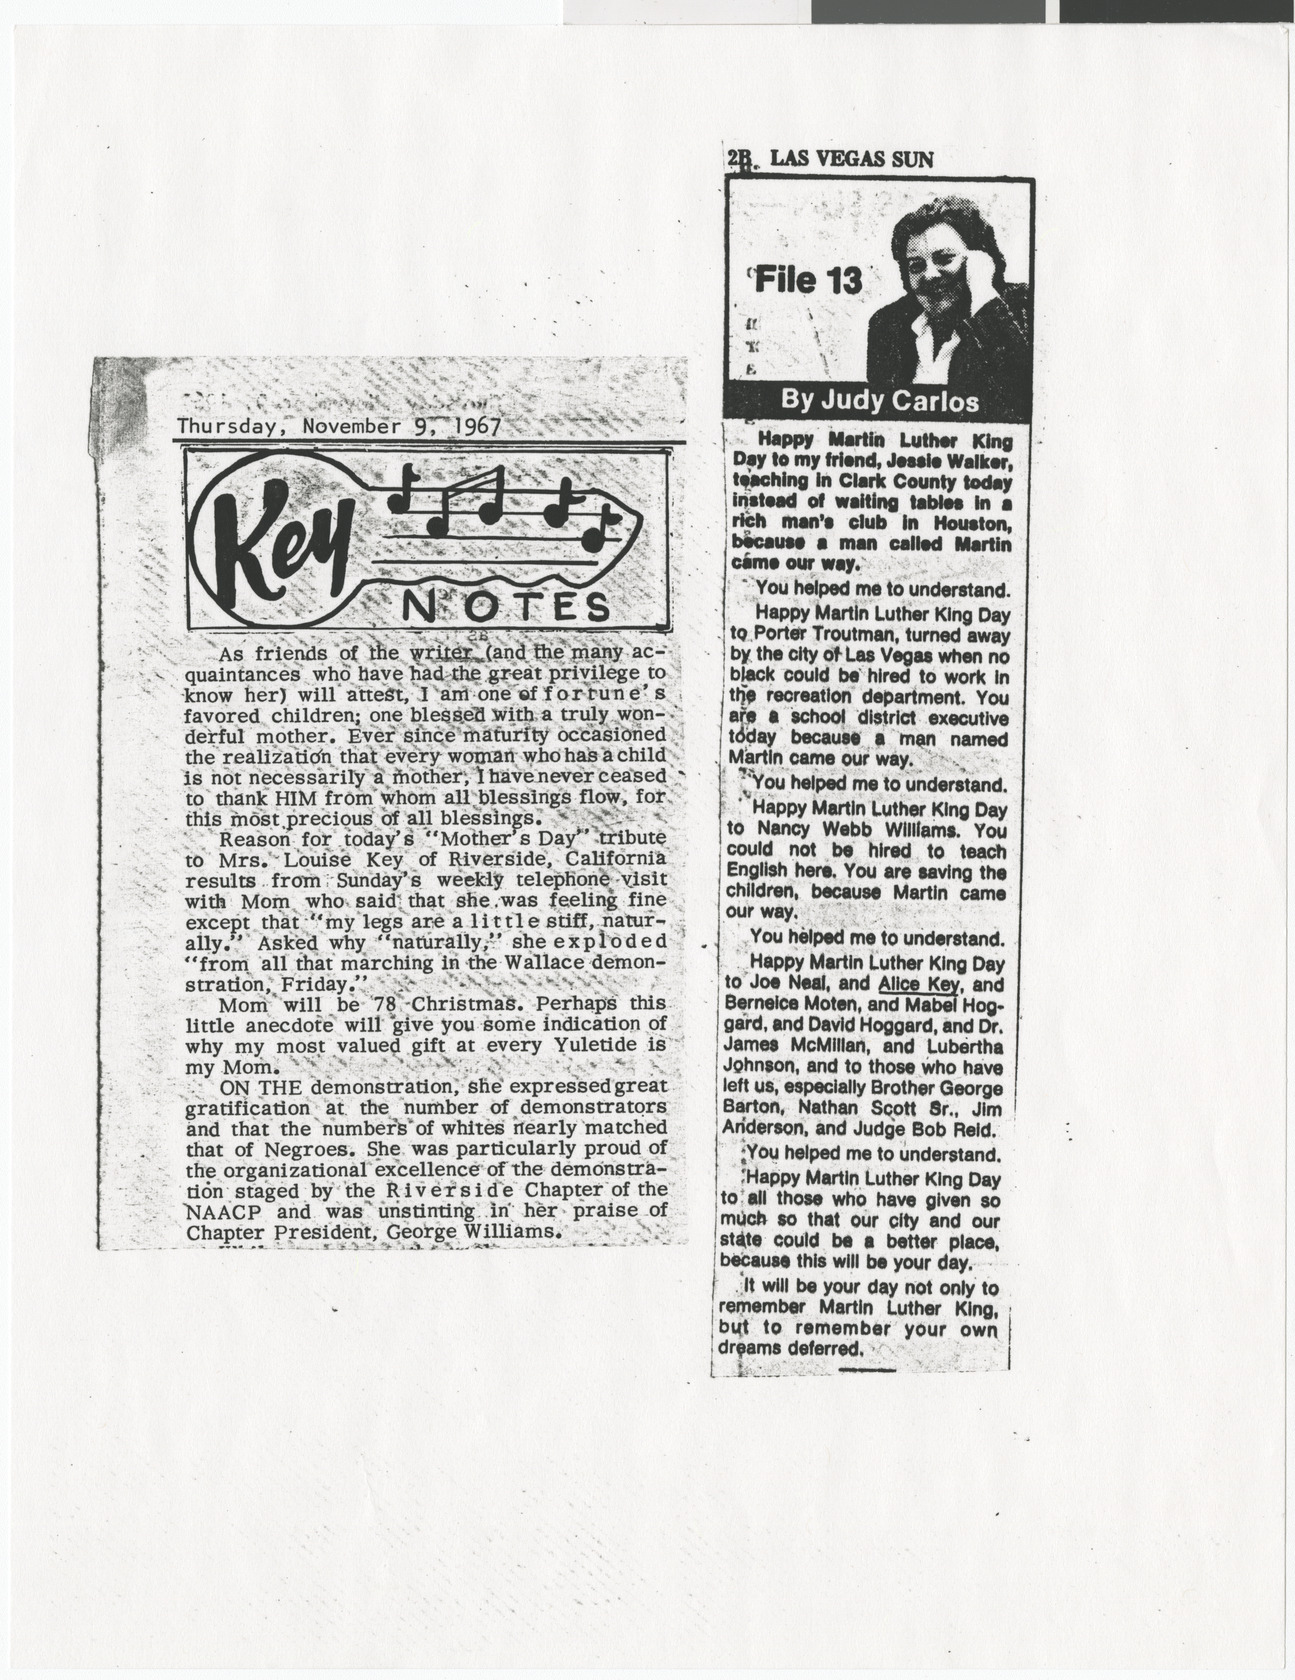 Newspaper clipping (copy), Key Notes, Las Vegas Sun, November 9, 1967